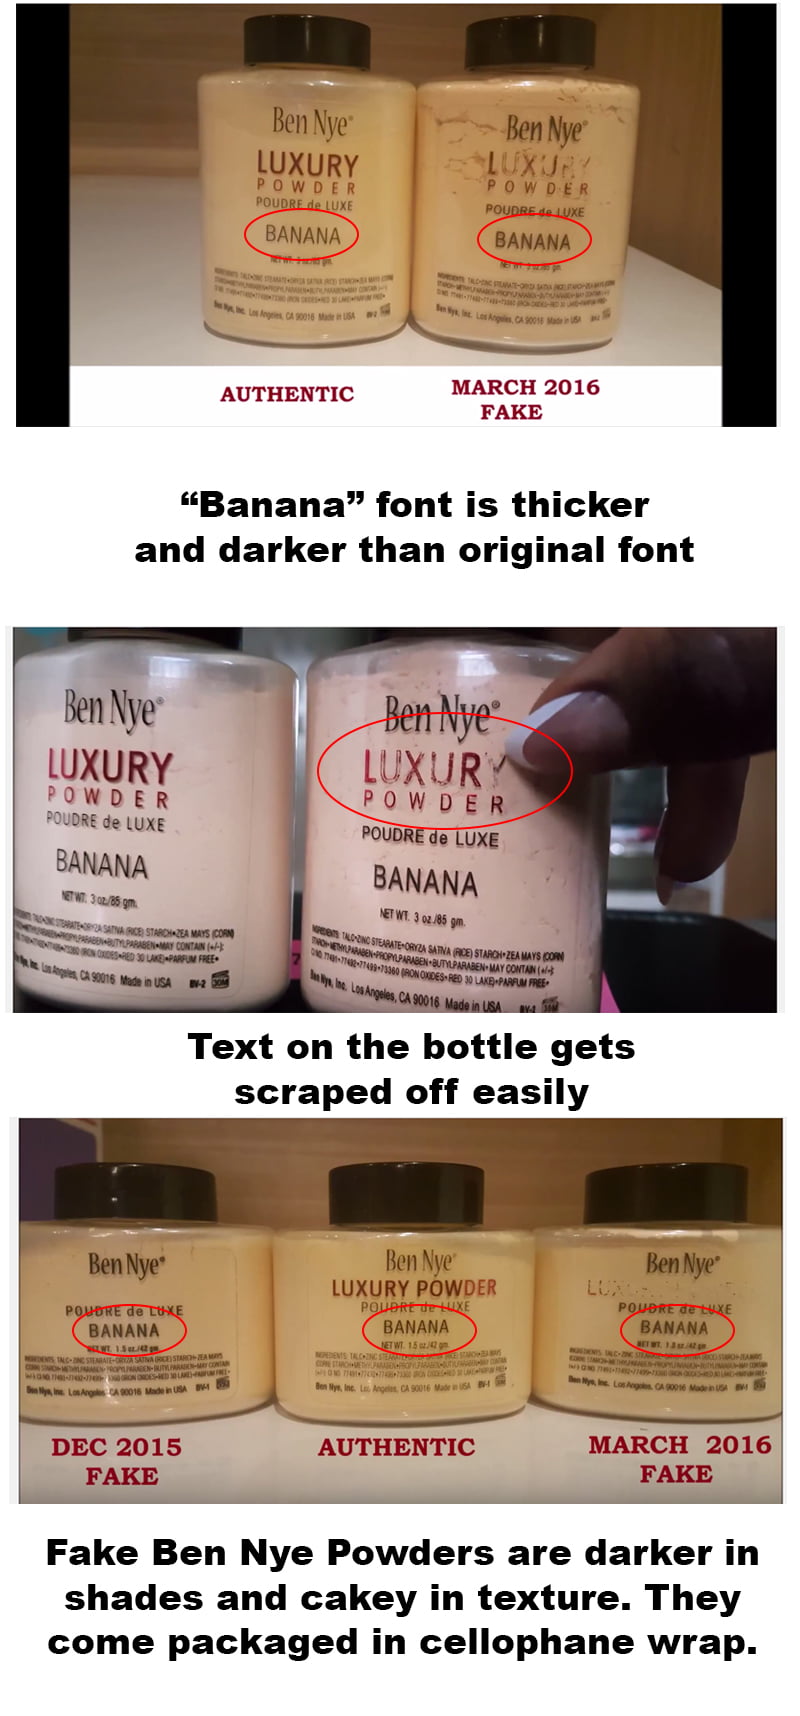 Ben Nye Banana Luxury Powder